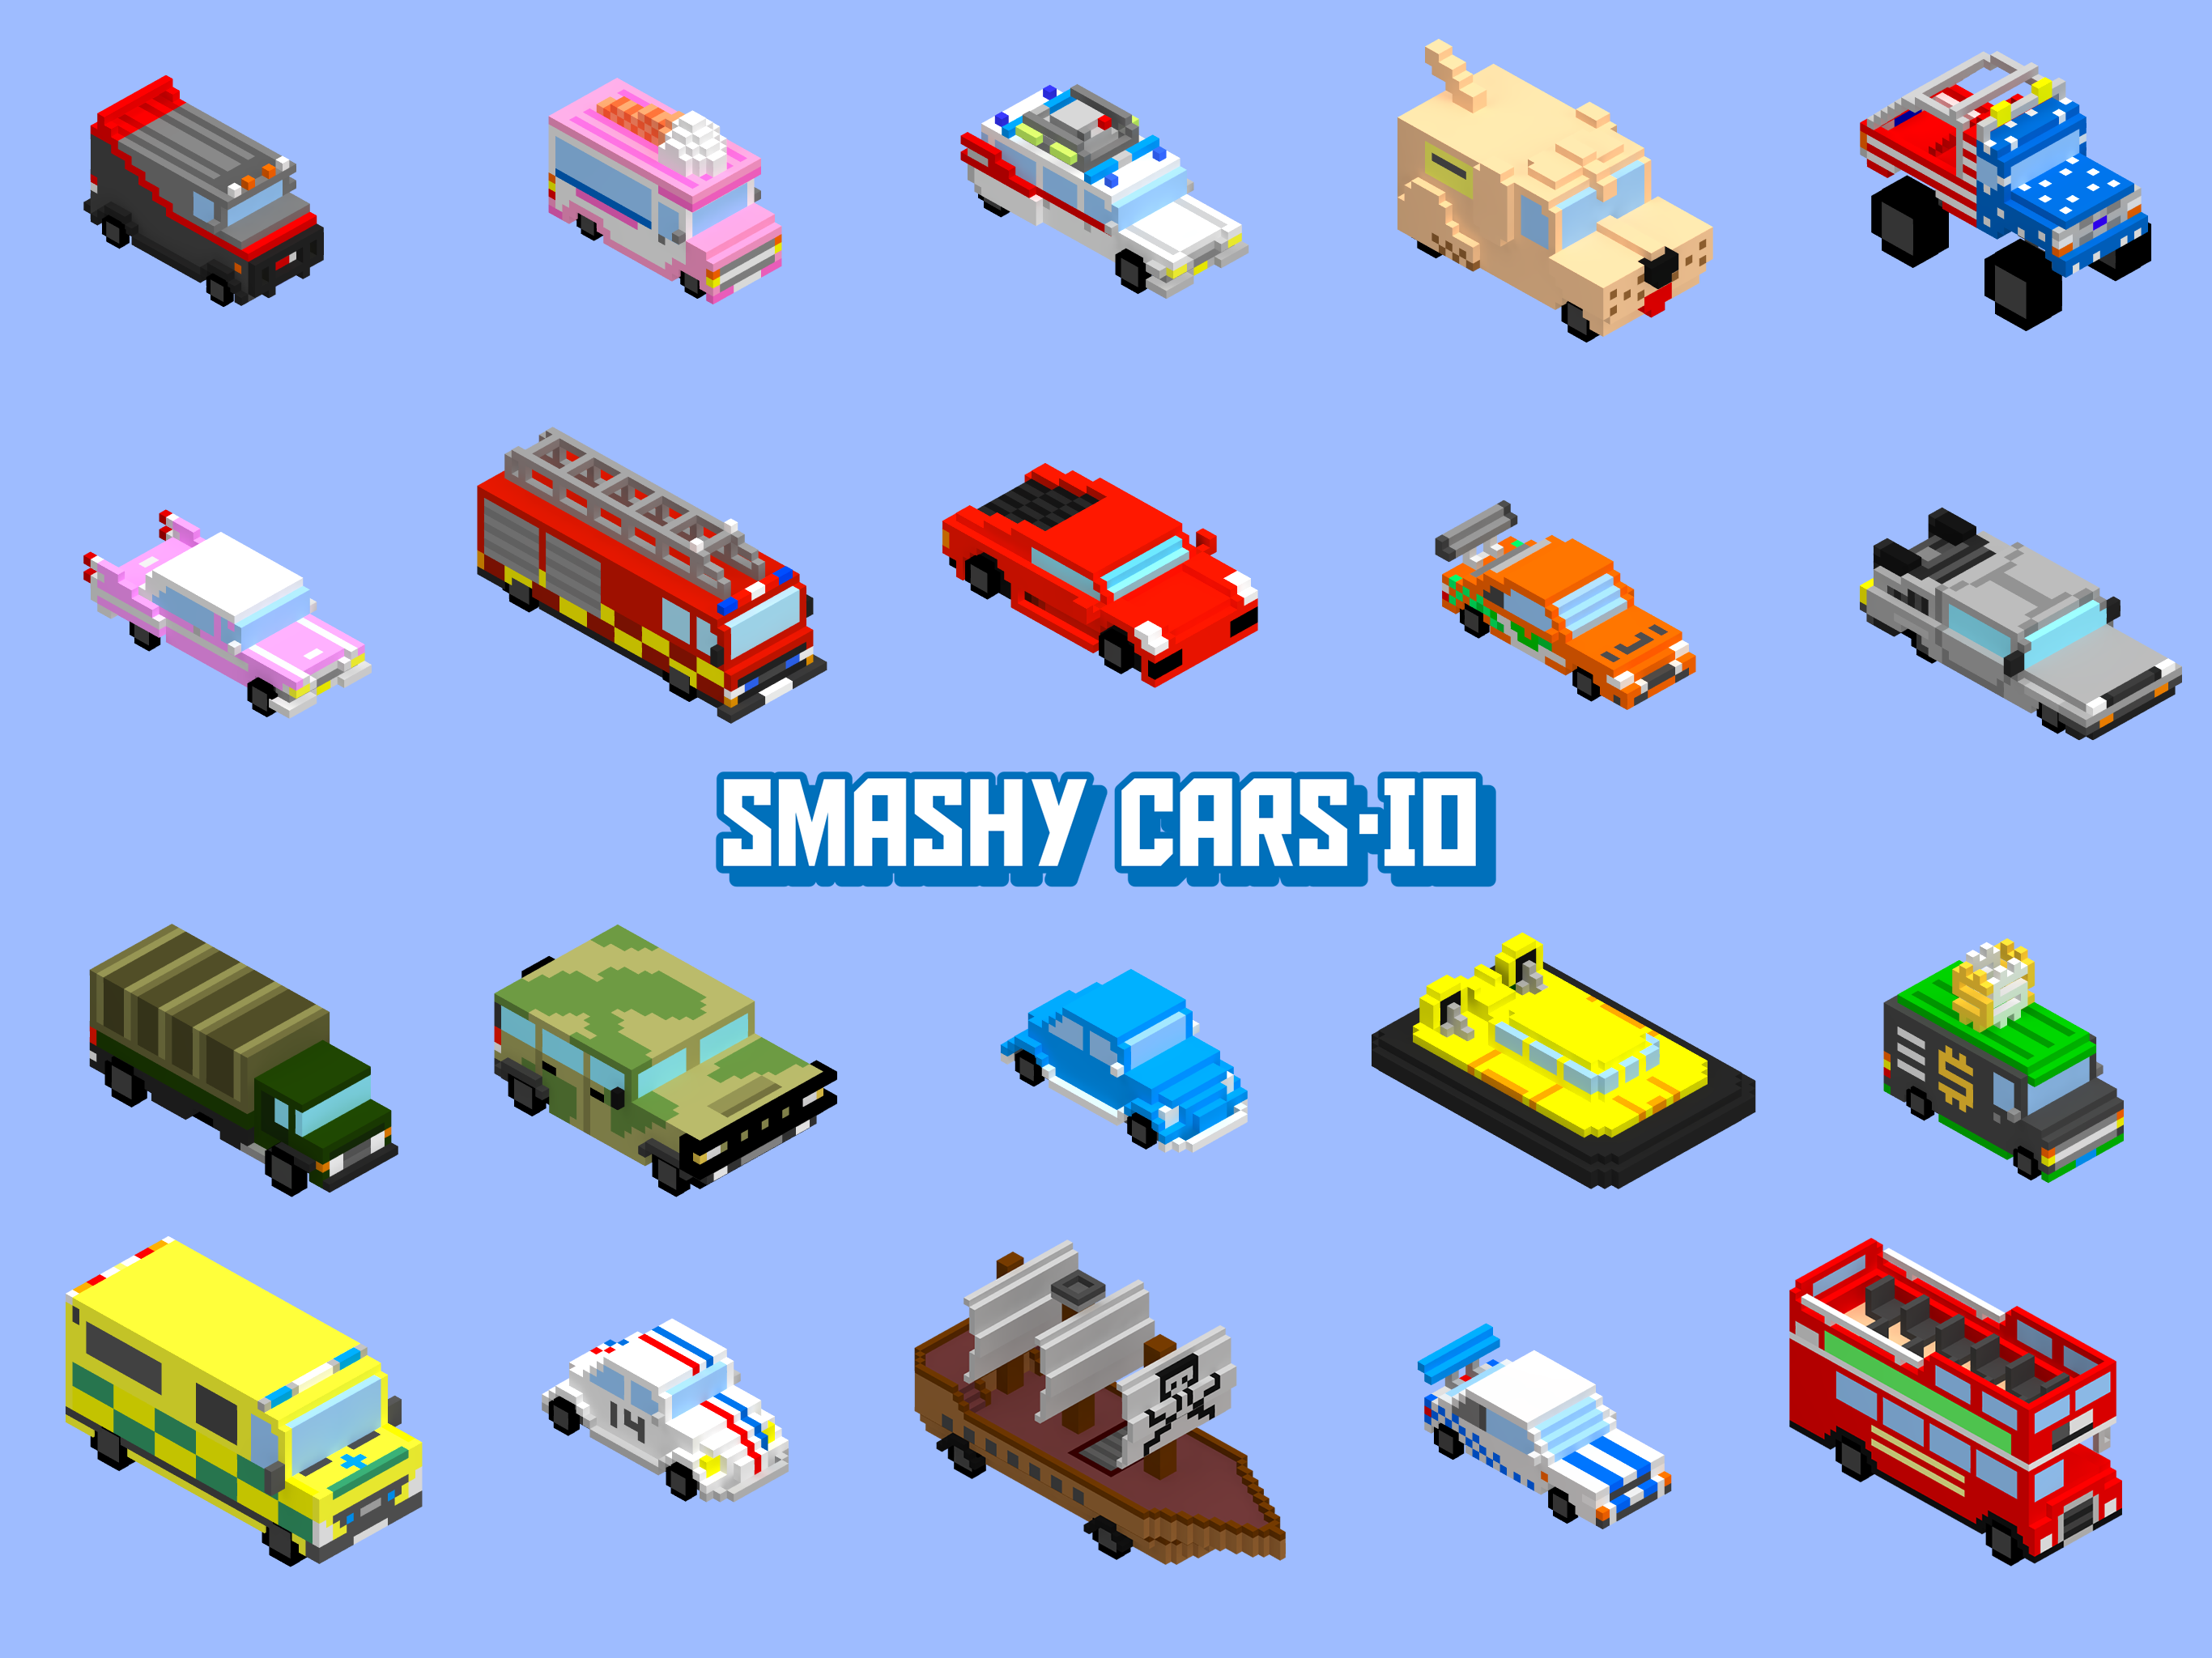 Smashy Cars .ioのキャプチャ